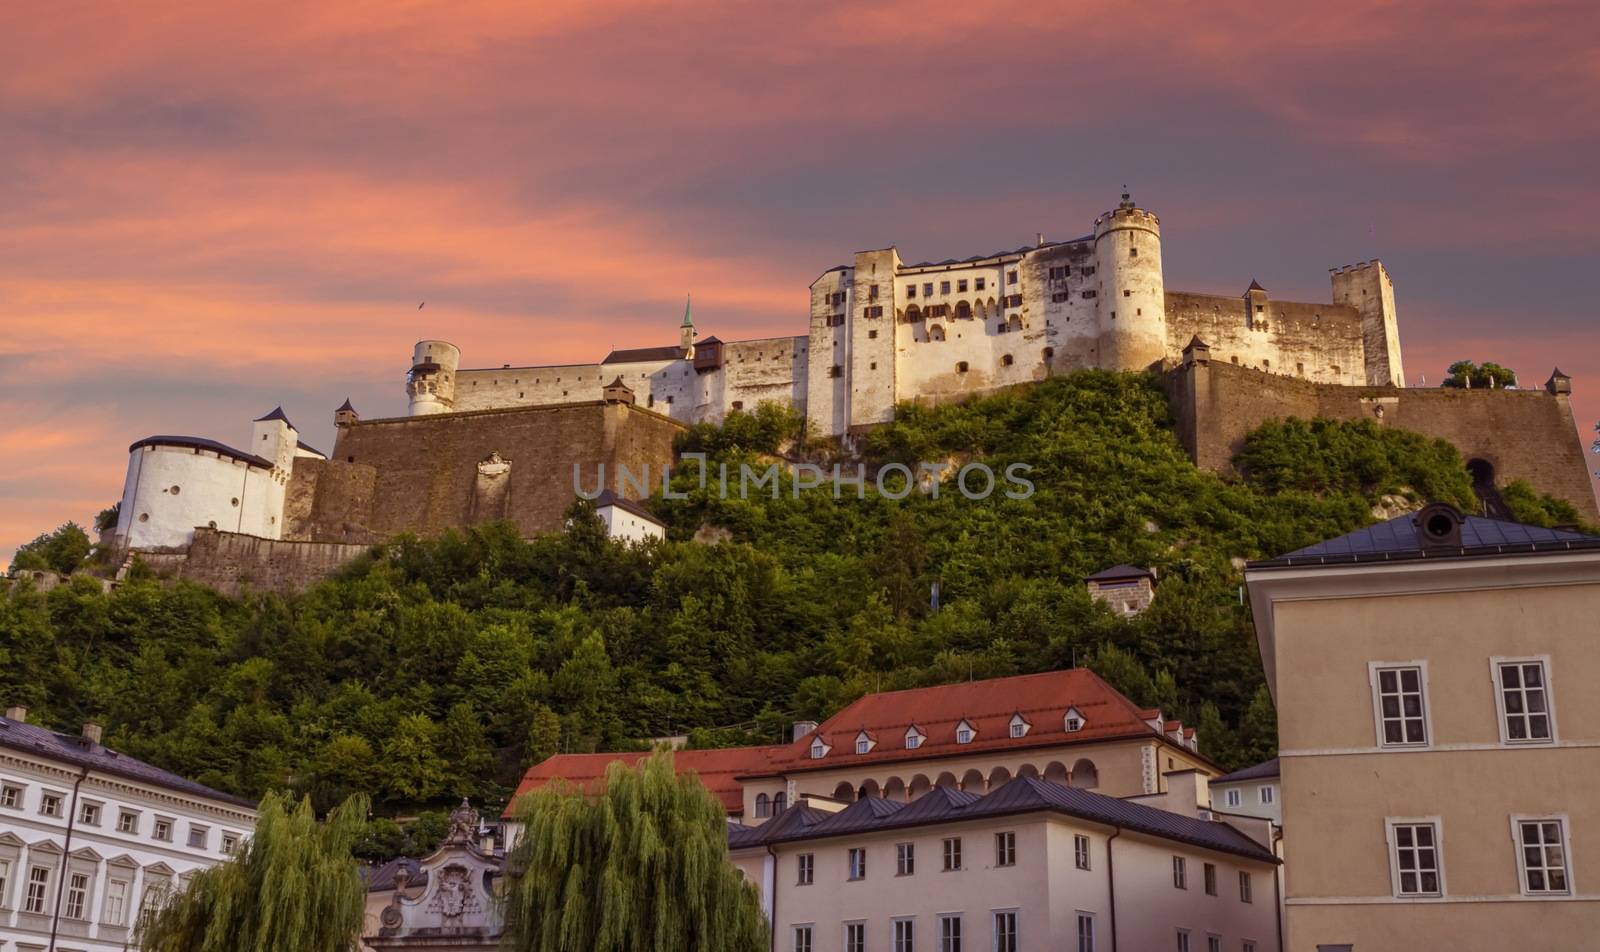 Famous Hohensalzburg Fortress on a hill in Salzburg, Austria by Elenaphotos21